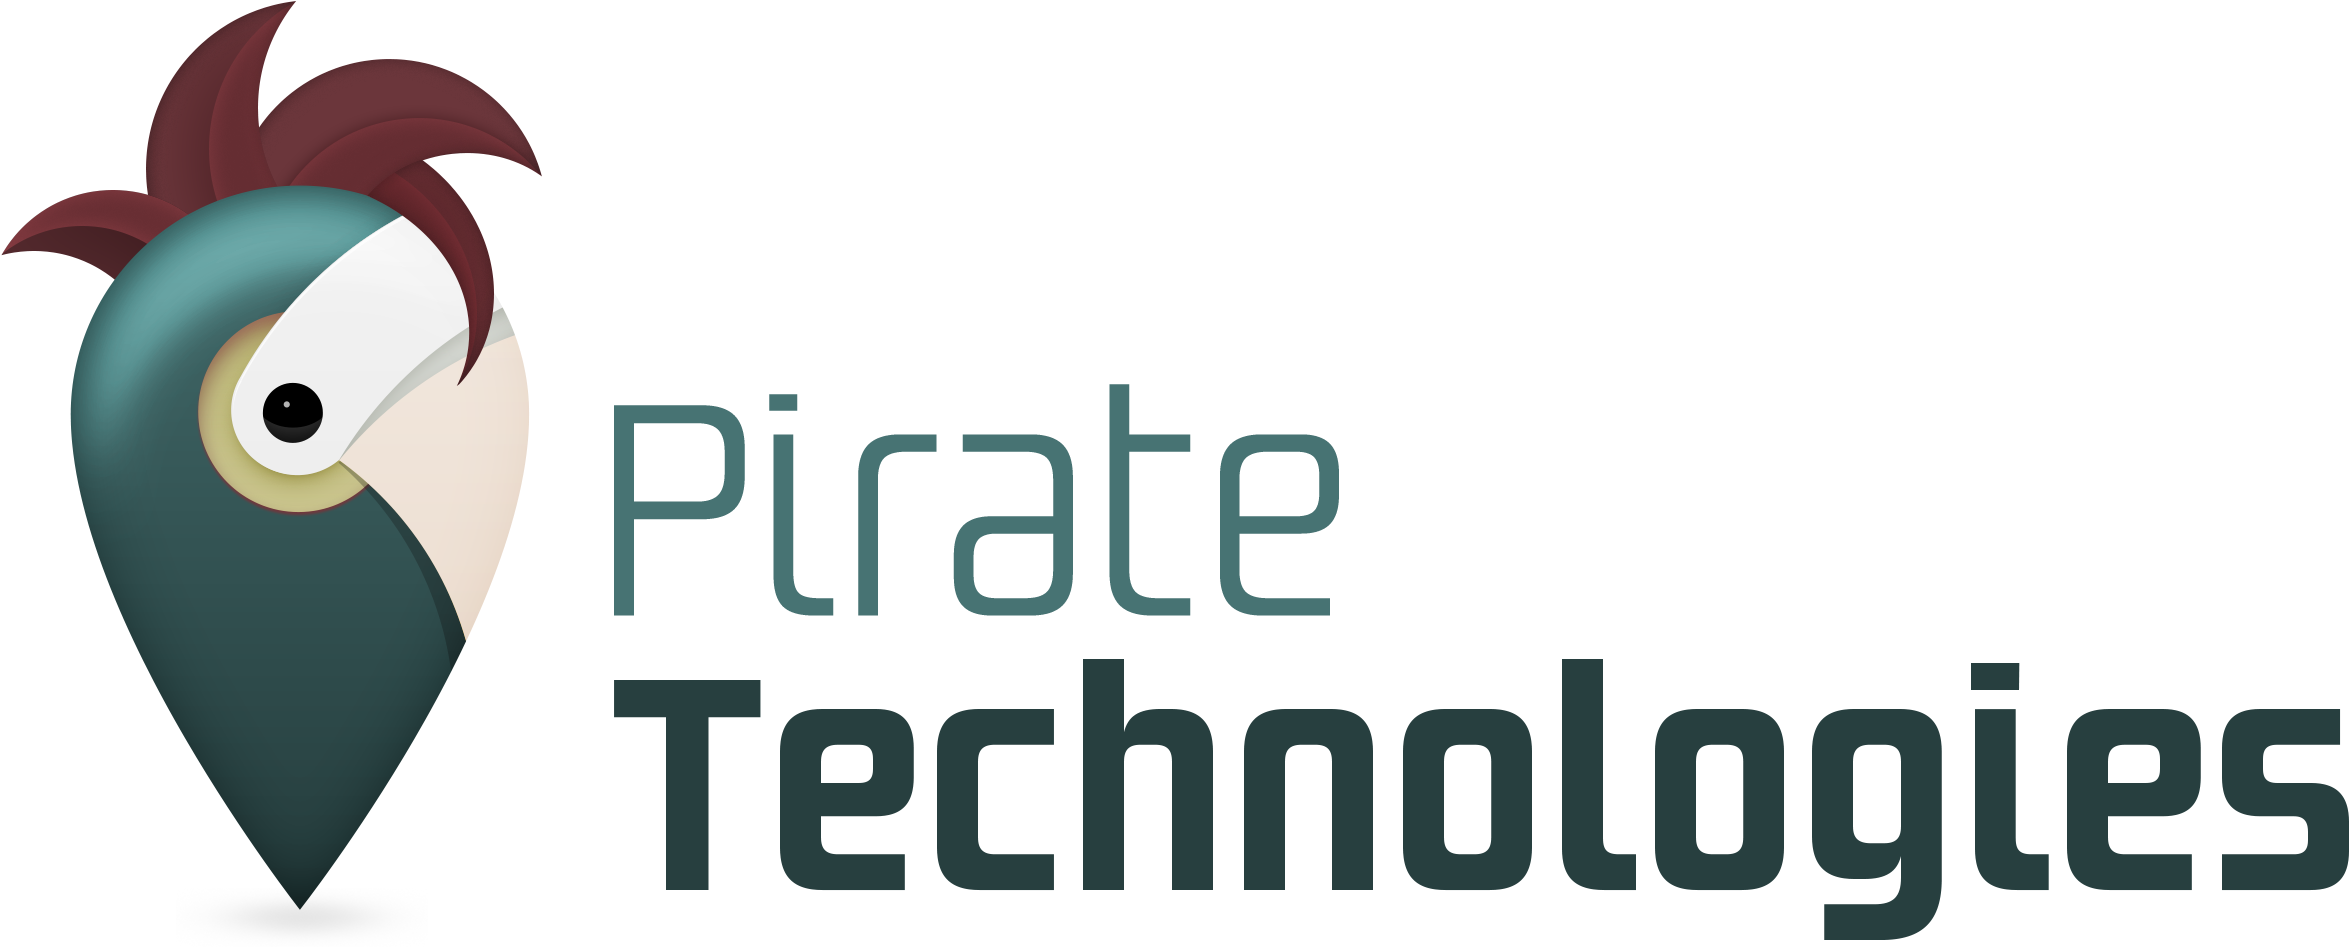 Holidaypiratesgroup's Technology Center - Pirate Technologies (2681x1148)